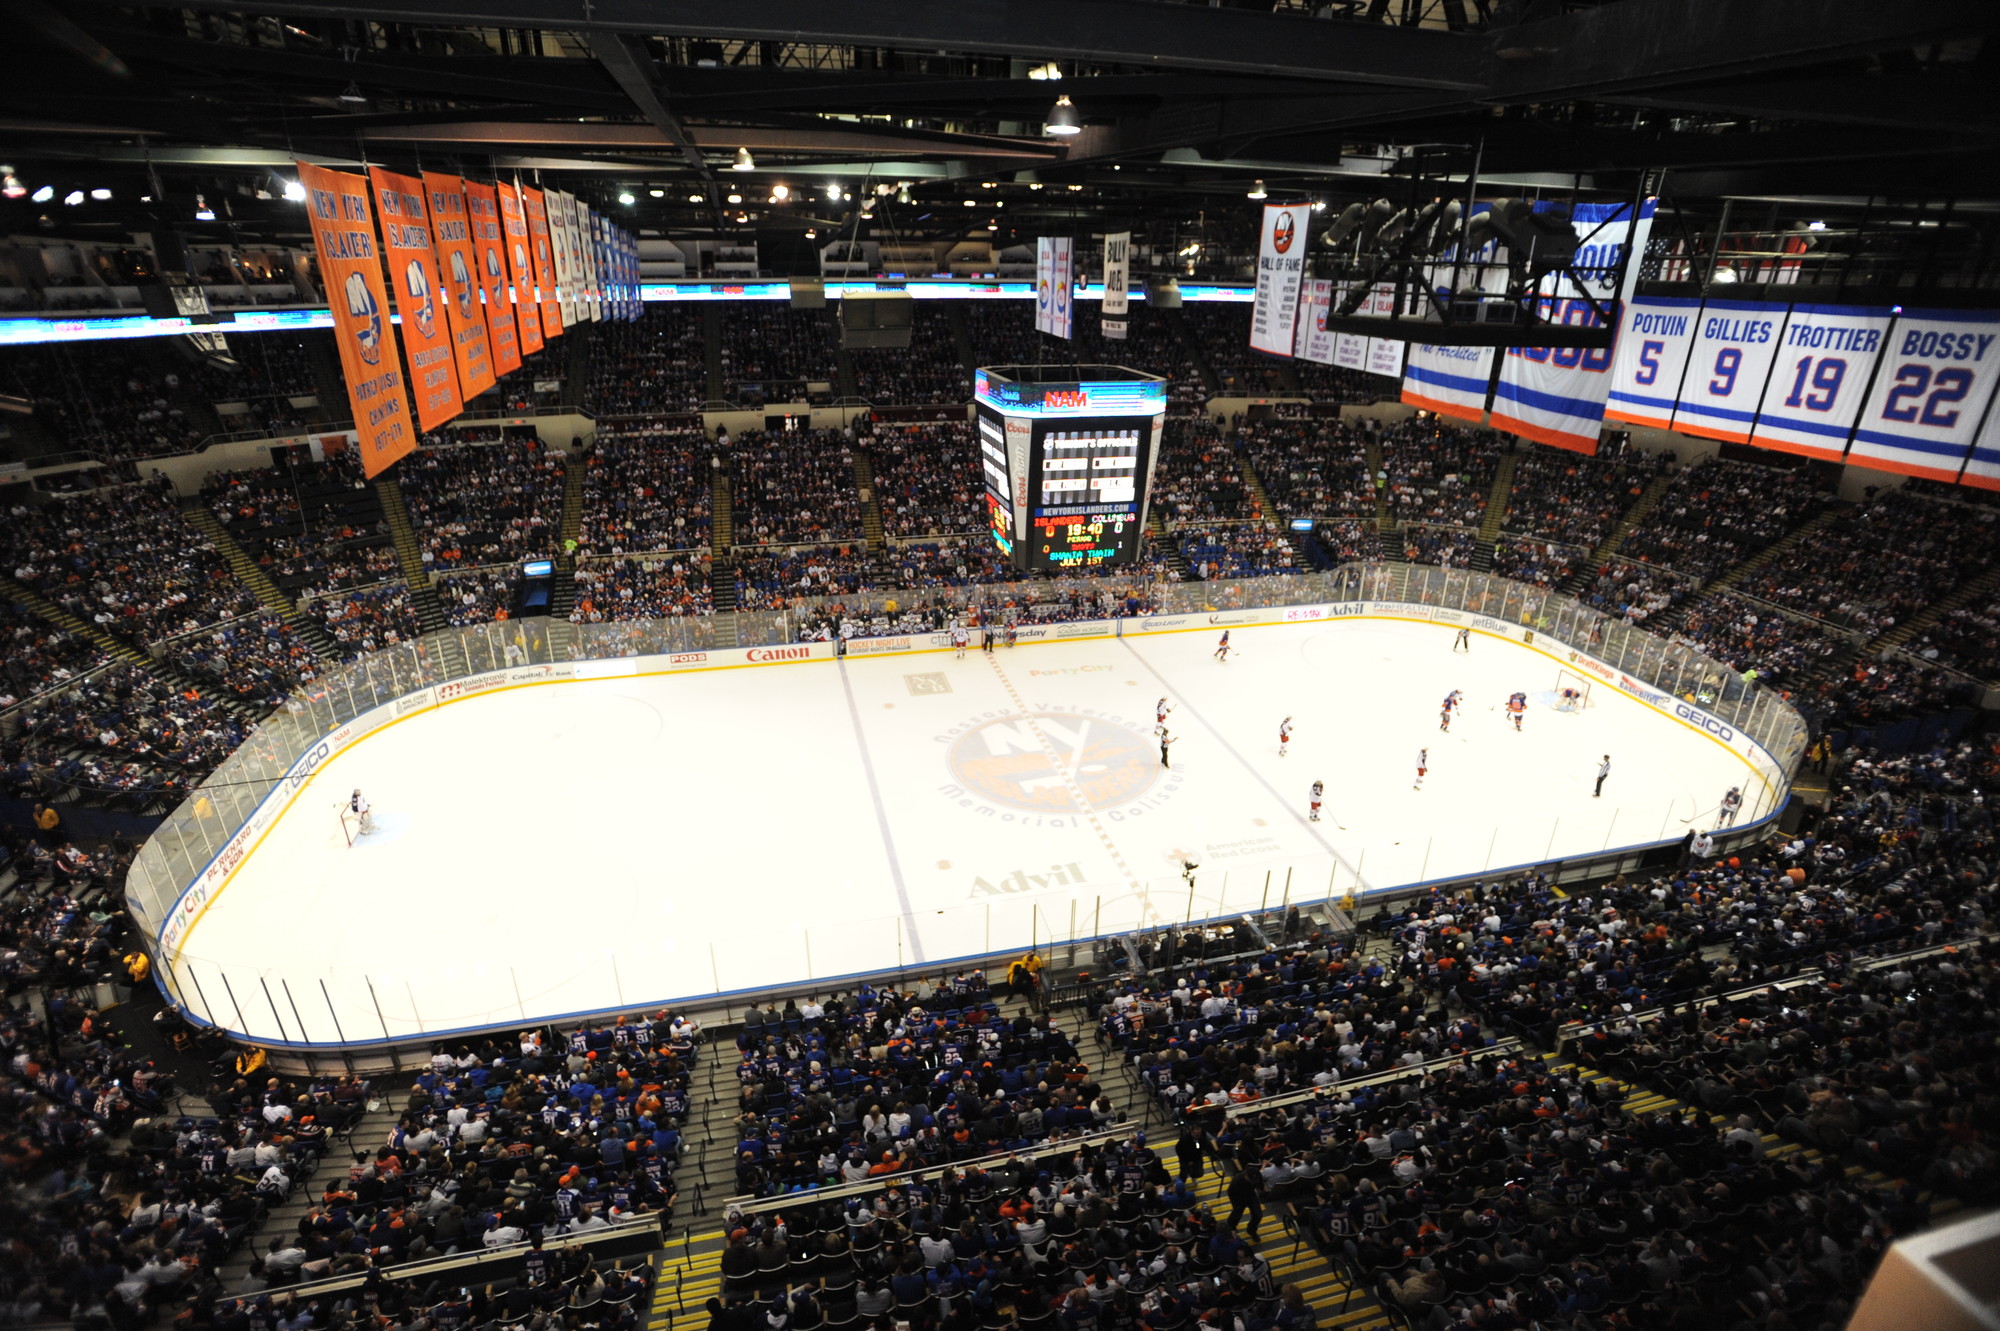 The Islanders played their final regular season game at Nassau Coliseum on April 11.